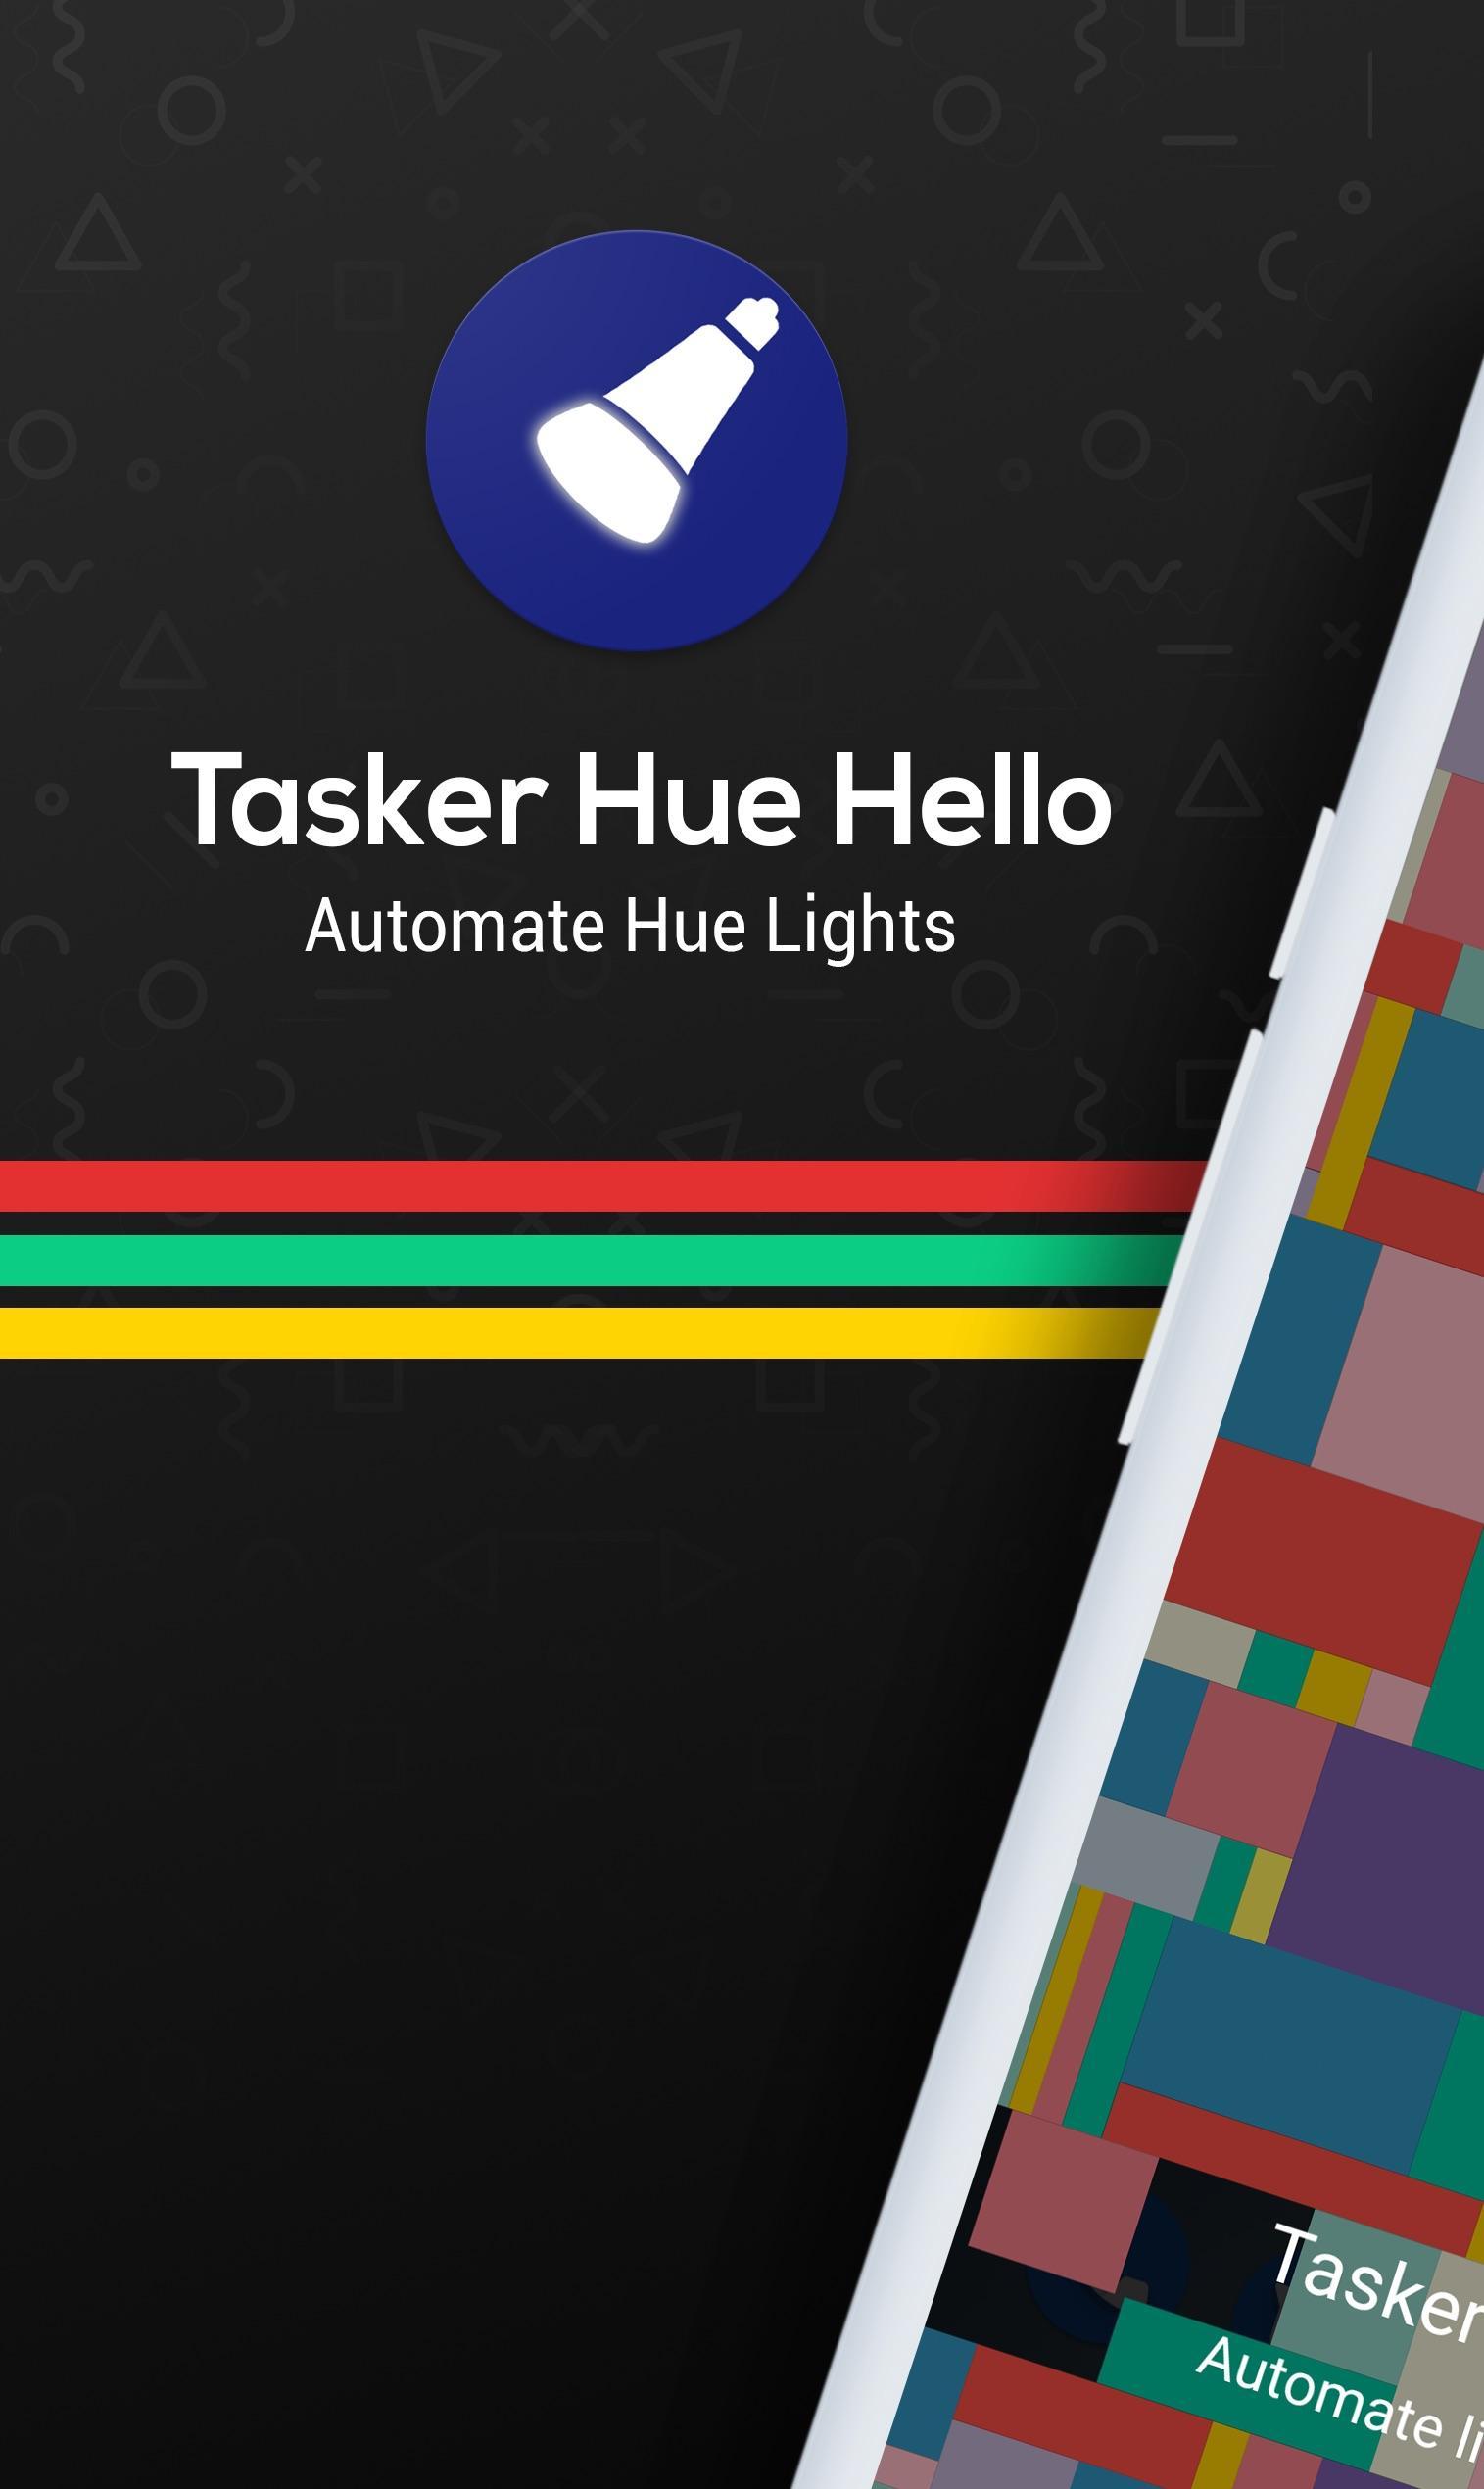 Tasker HueHello for Android - APK Download